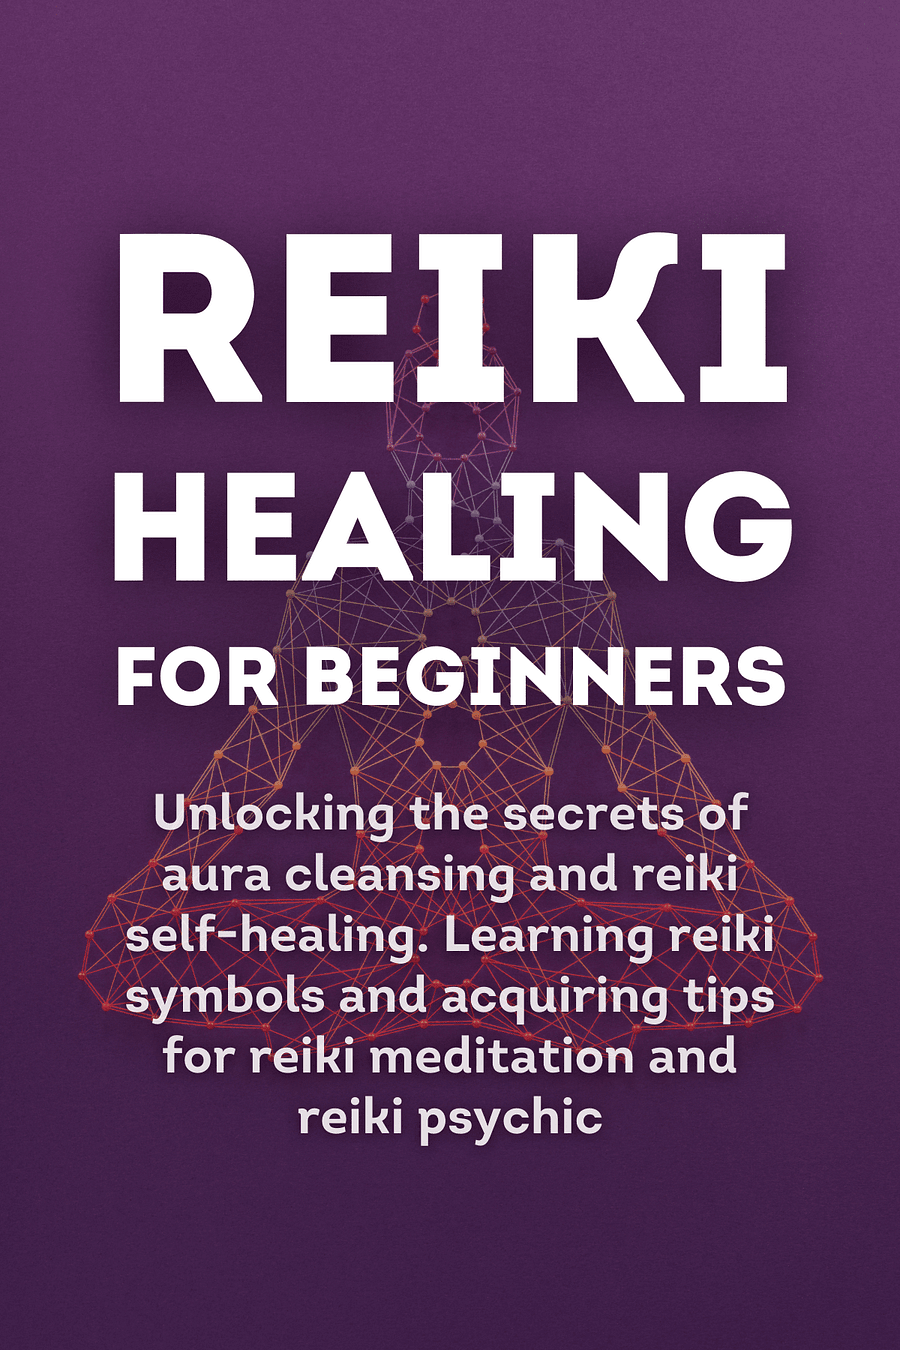 Reiki Healing for Beginners by David Filipe - Book Summary